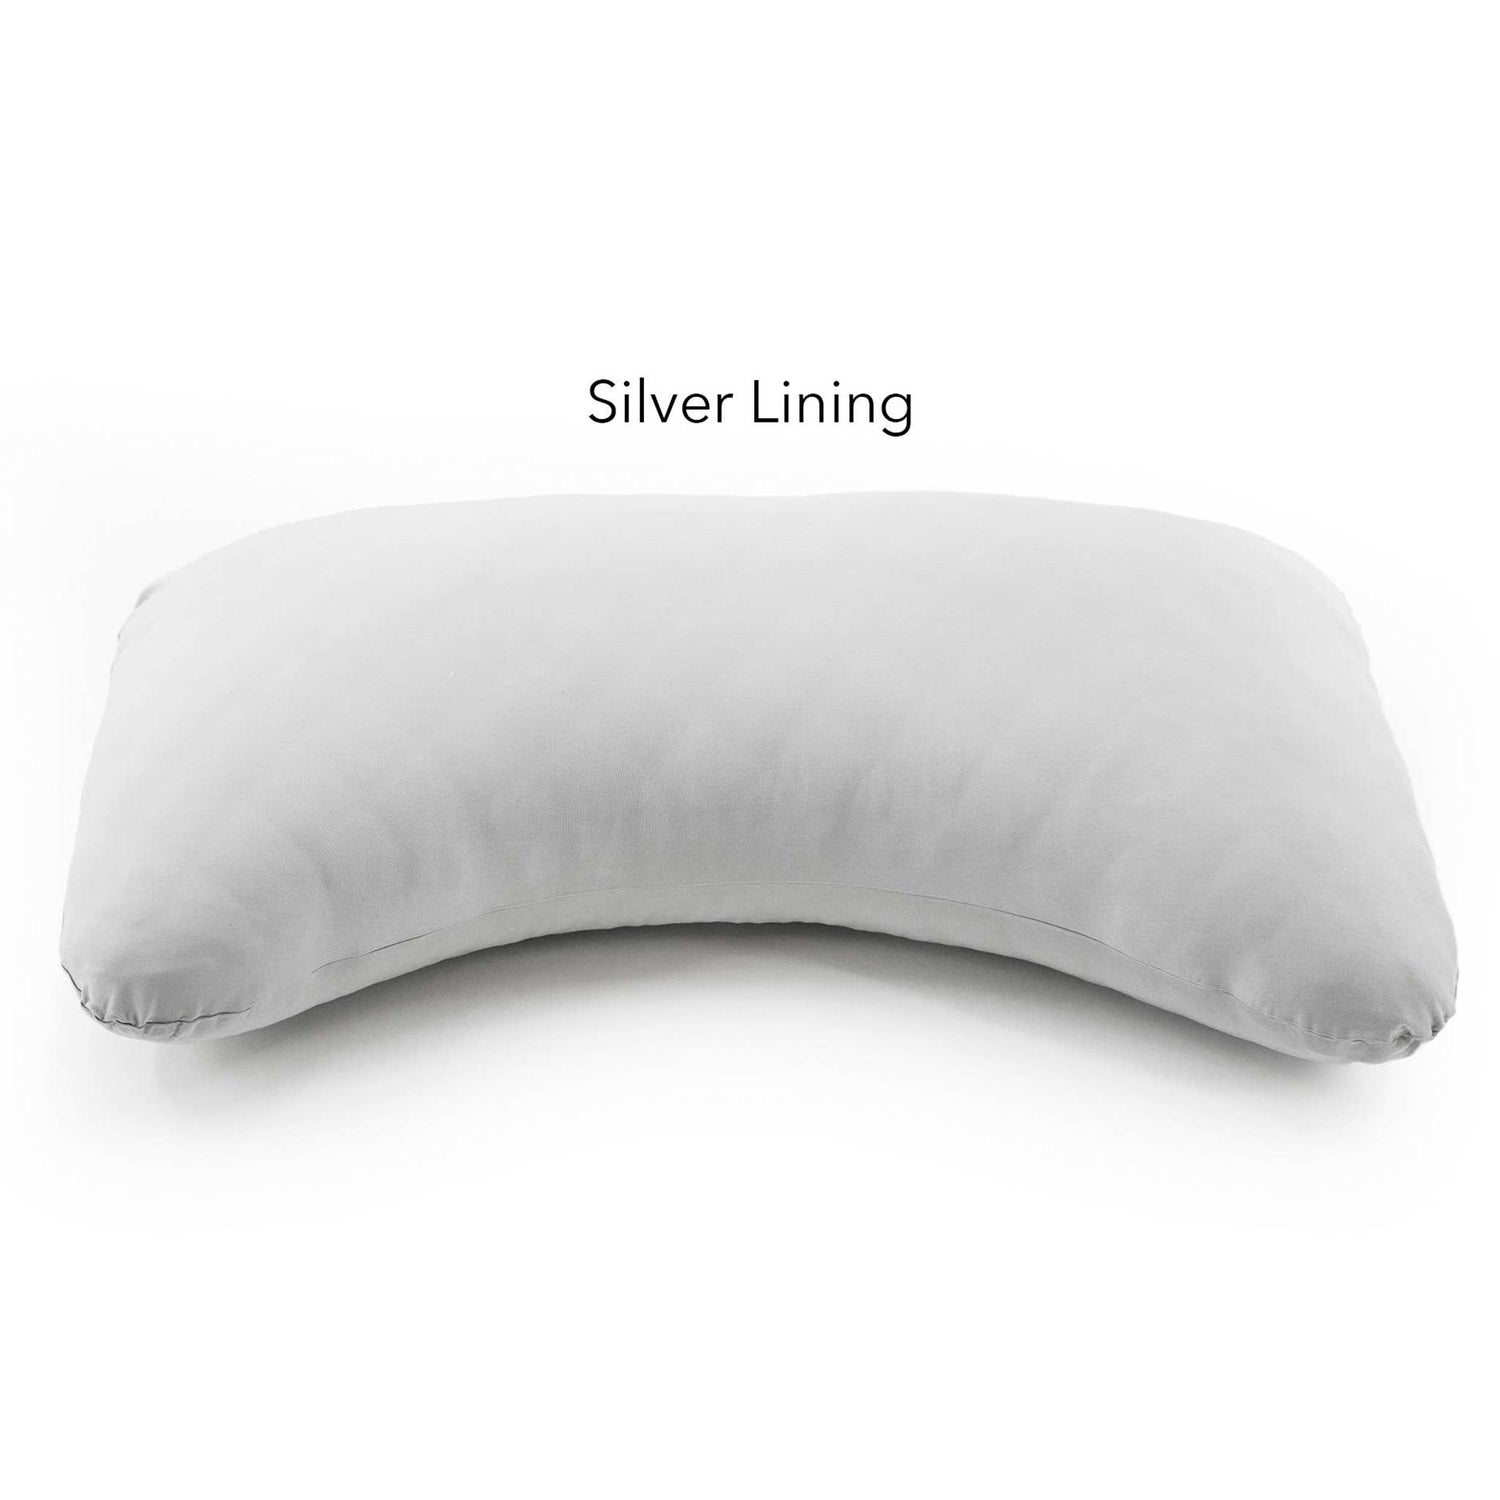 The Scrumptious Pillowcase for Travel Pillows